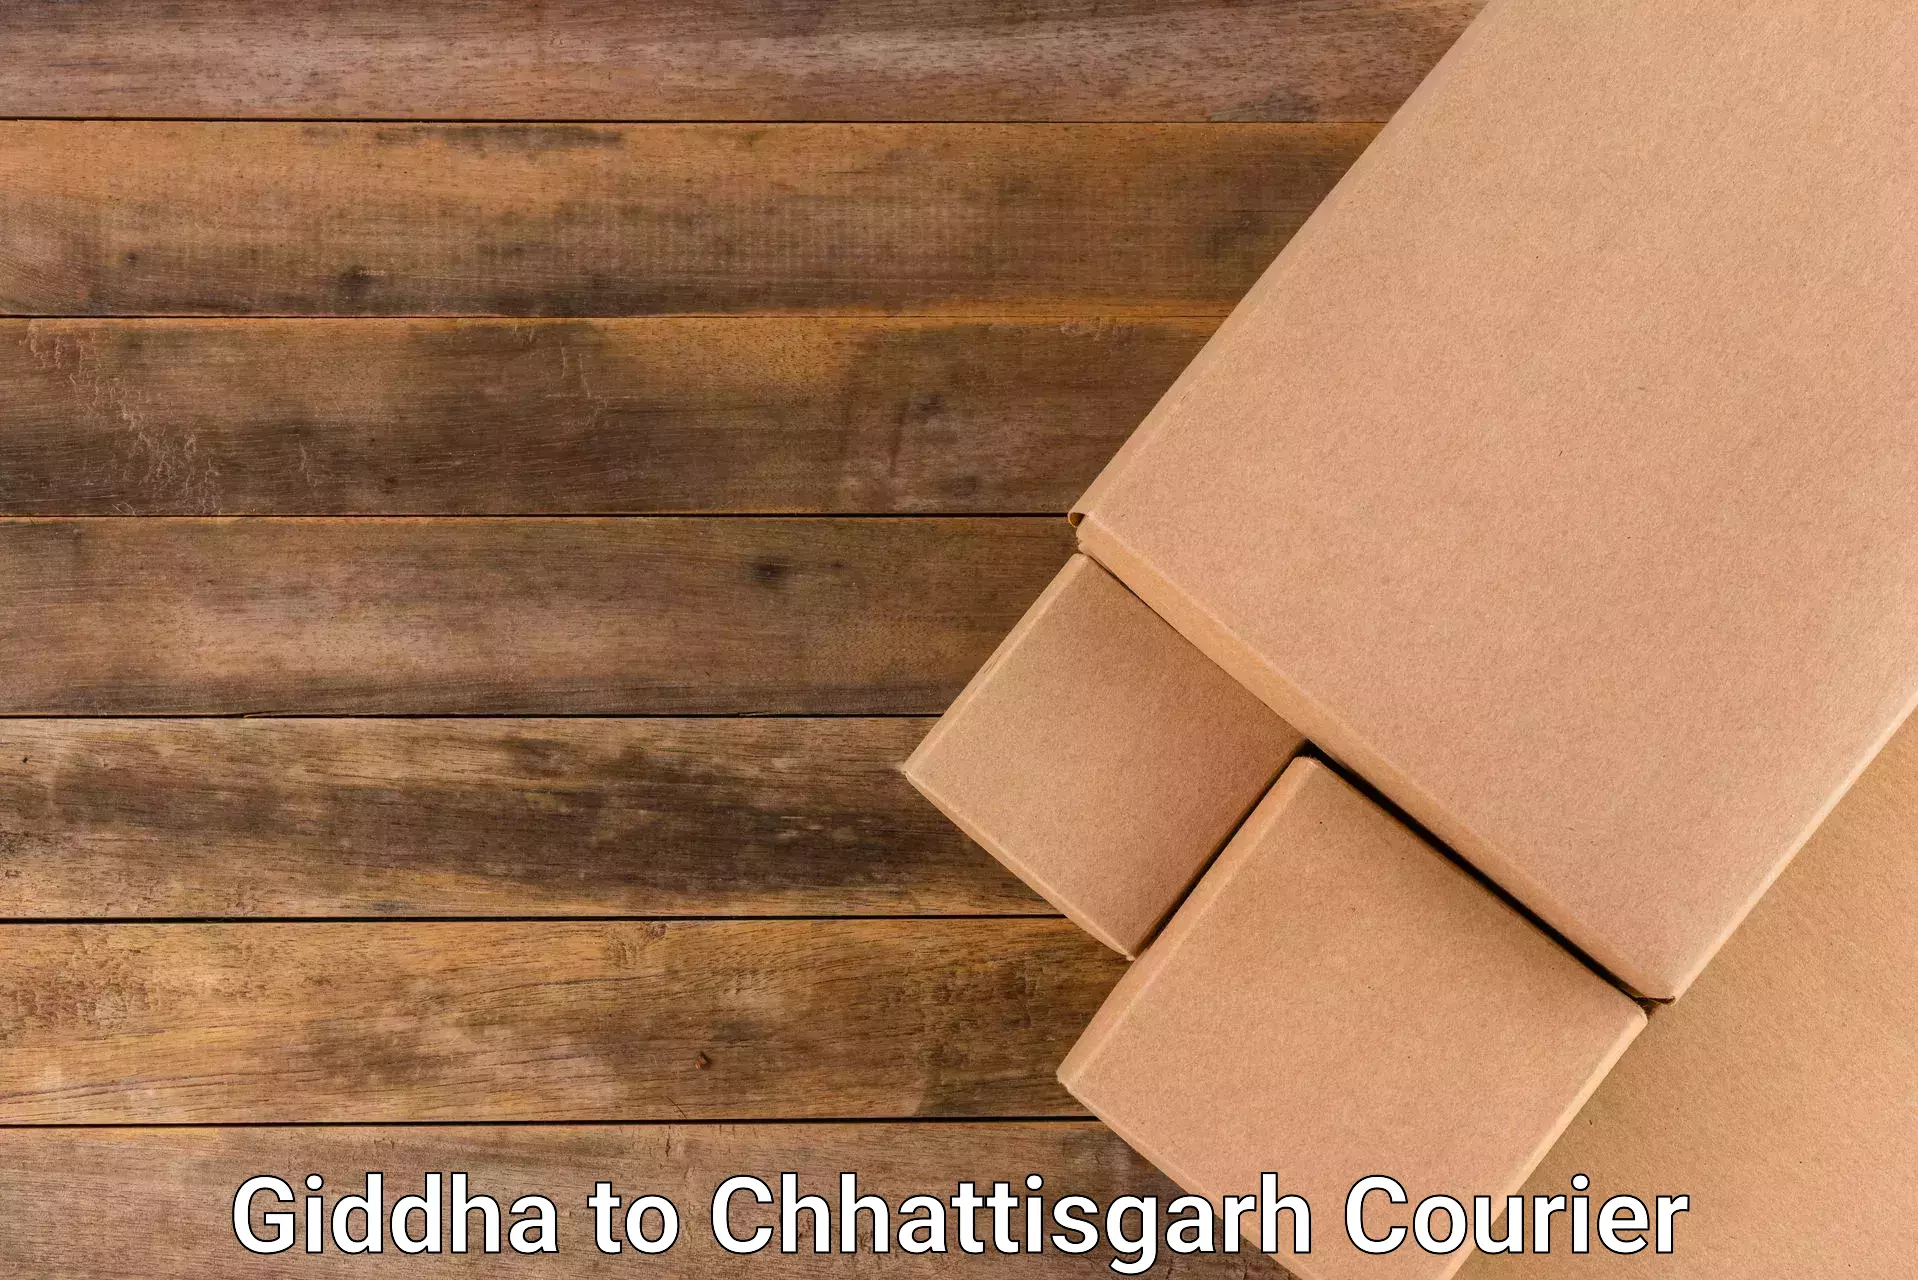 Cash on delivery service Giddha to Patna Chhattisgarh